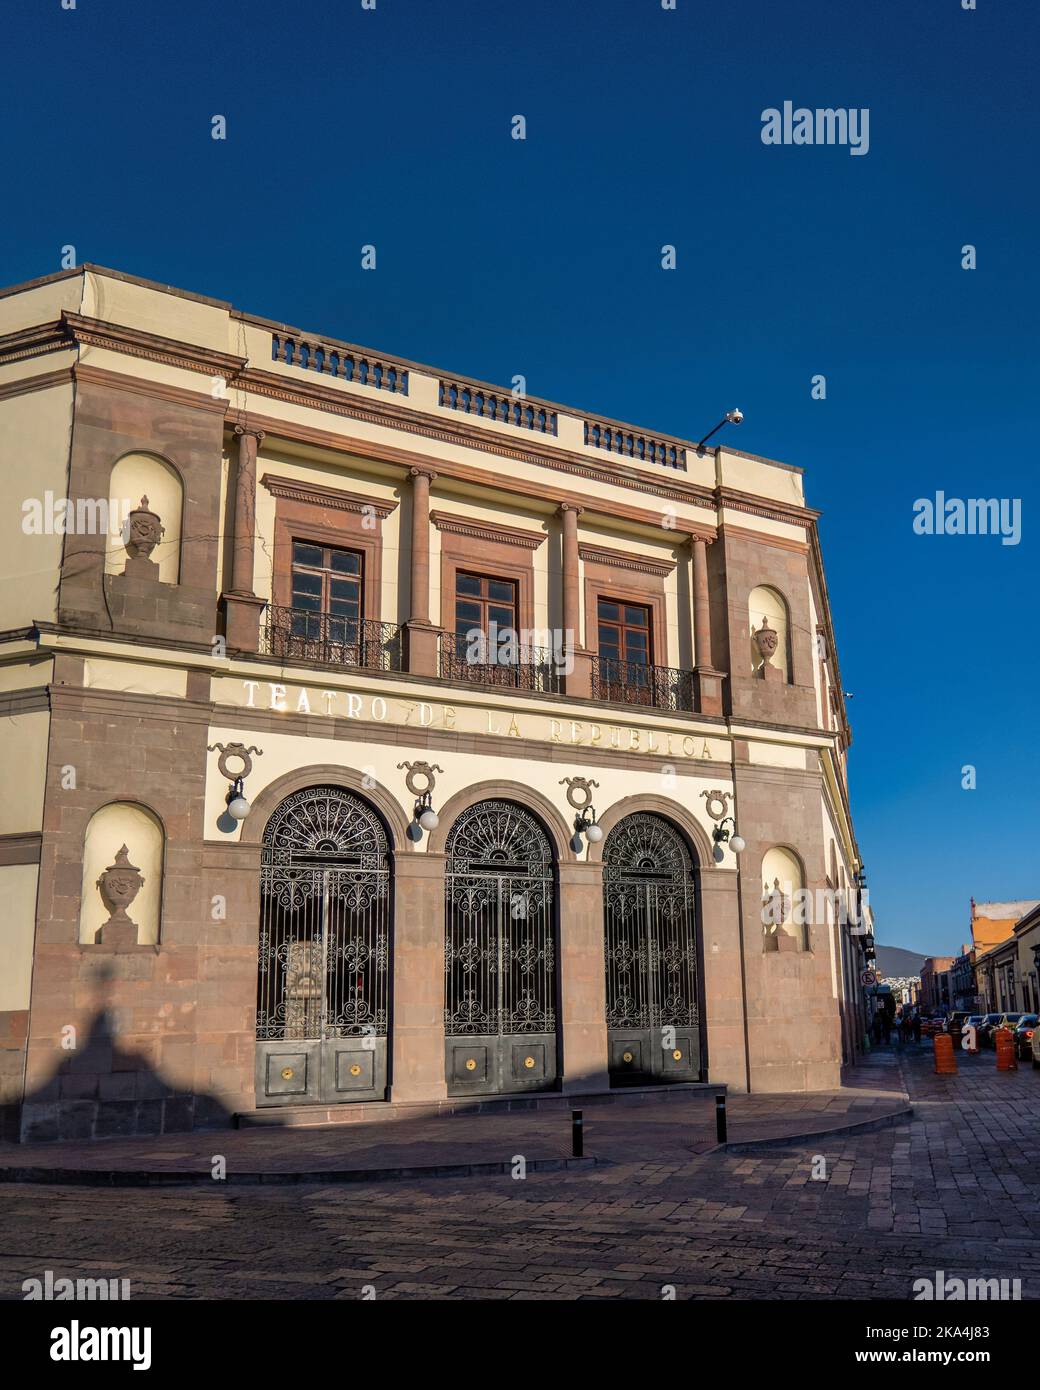 A Theater of the Republic in Queretaro, Mexico Stock Photo